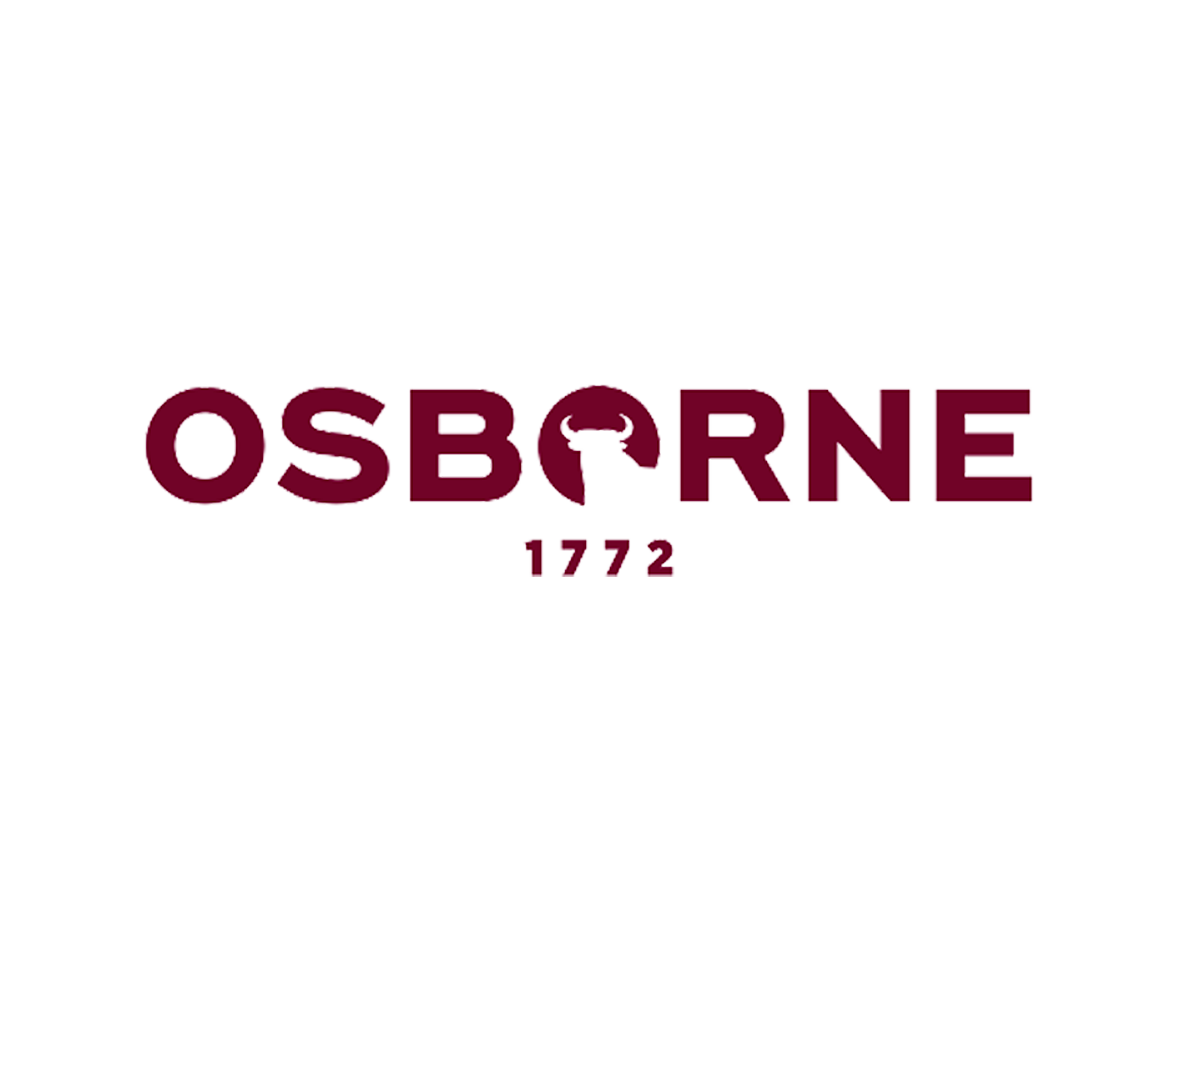 Fernando Terry Osborne